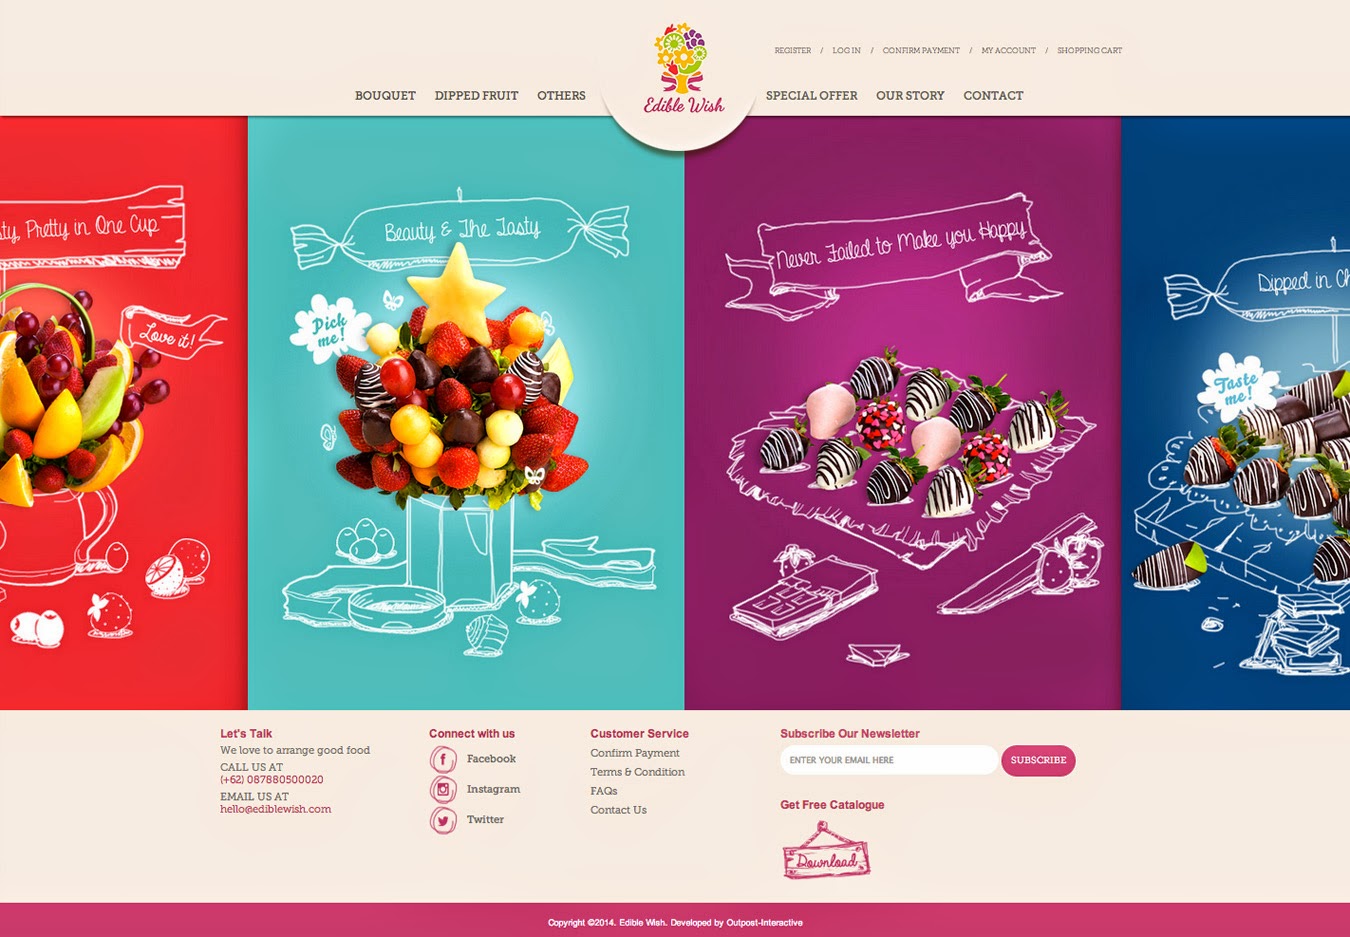 Edible Wish  Online Shopping  soyavsfood